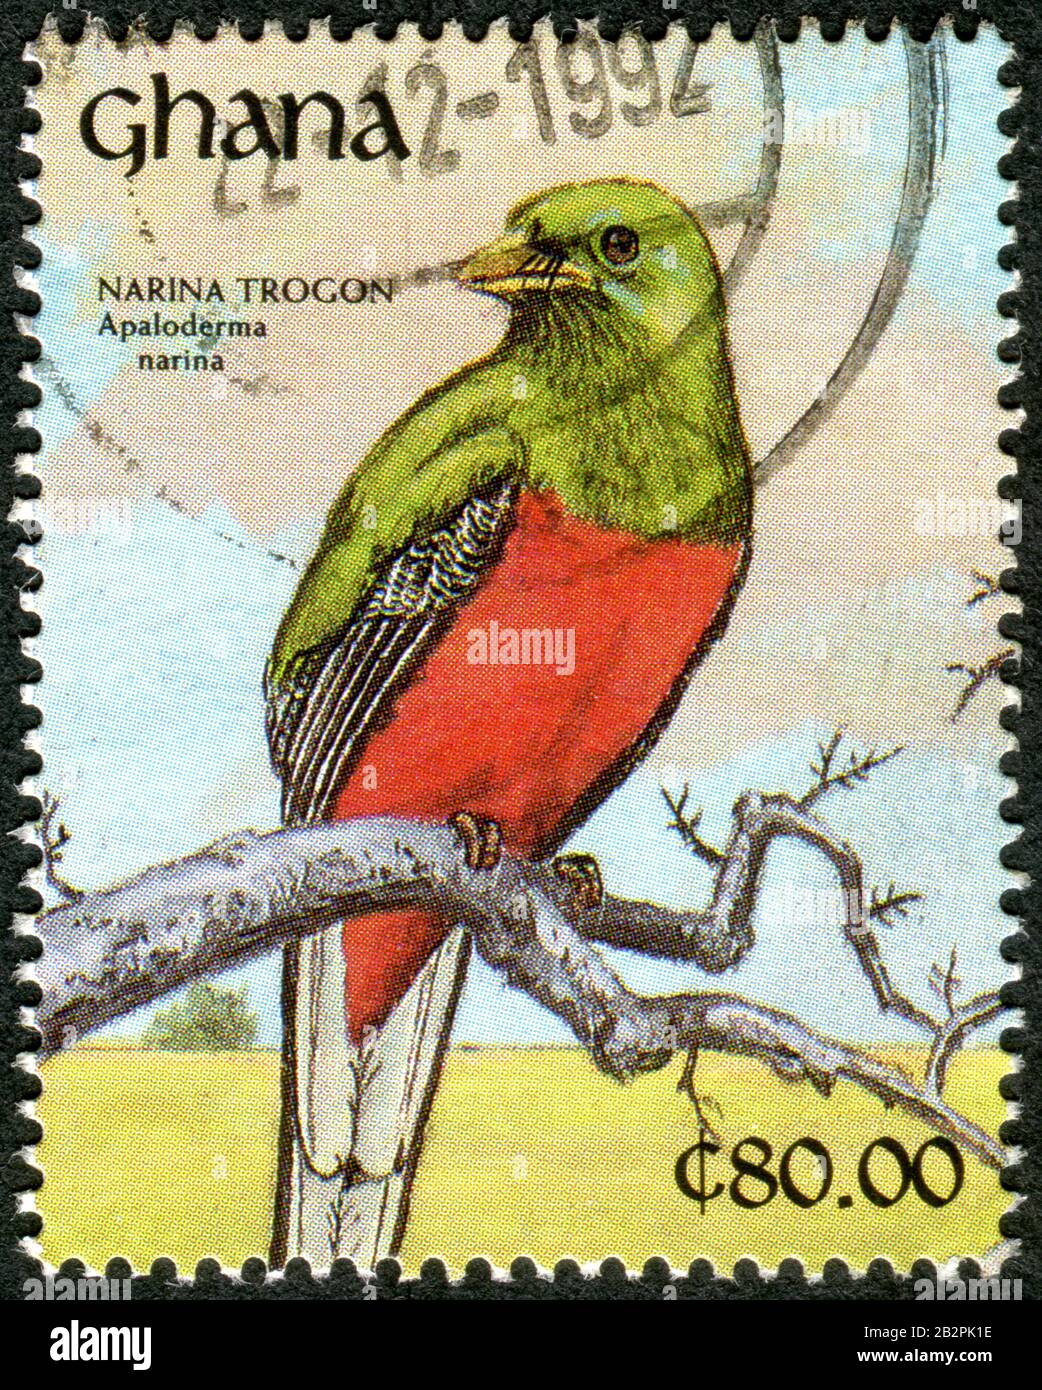 GHANA - CIRCA 1991: A stamp printed in Ghana, depicted the bird of Narina Trogon (Apaloderma narina), circa 1991 Stock Photo